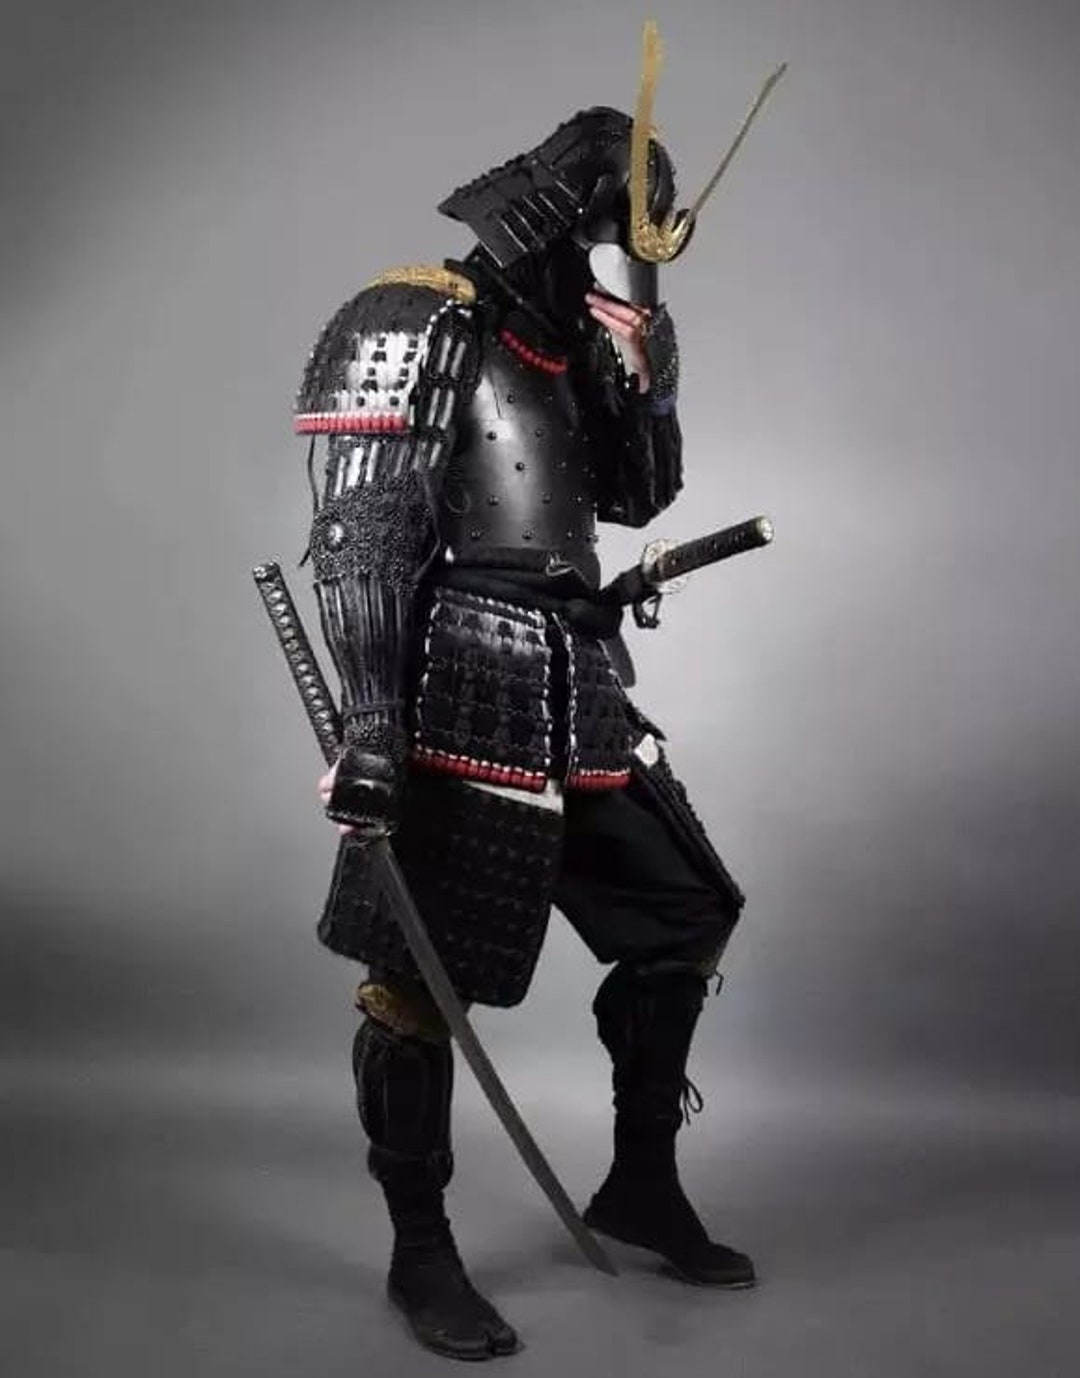 Samurai Armor Hoodies From Japan